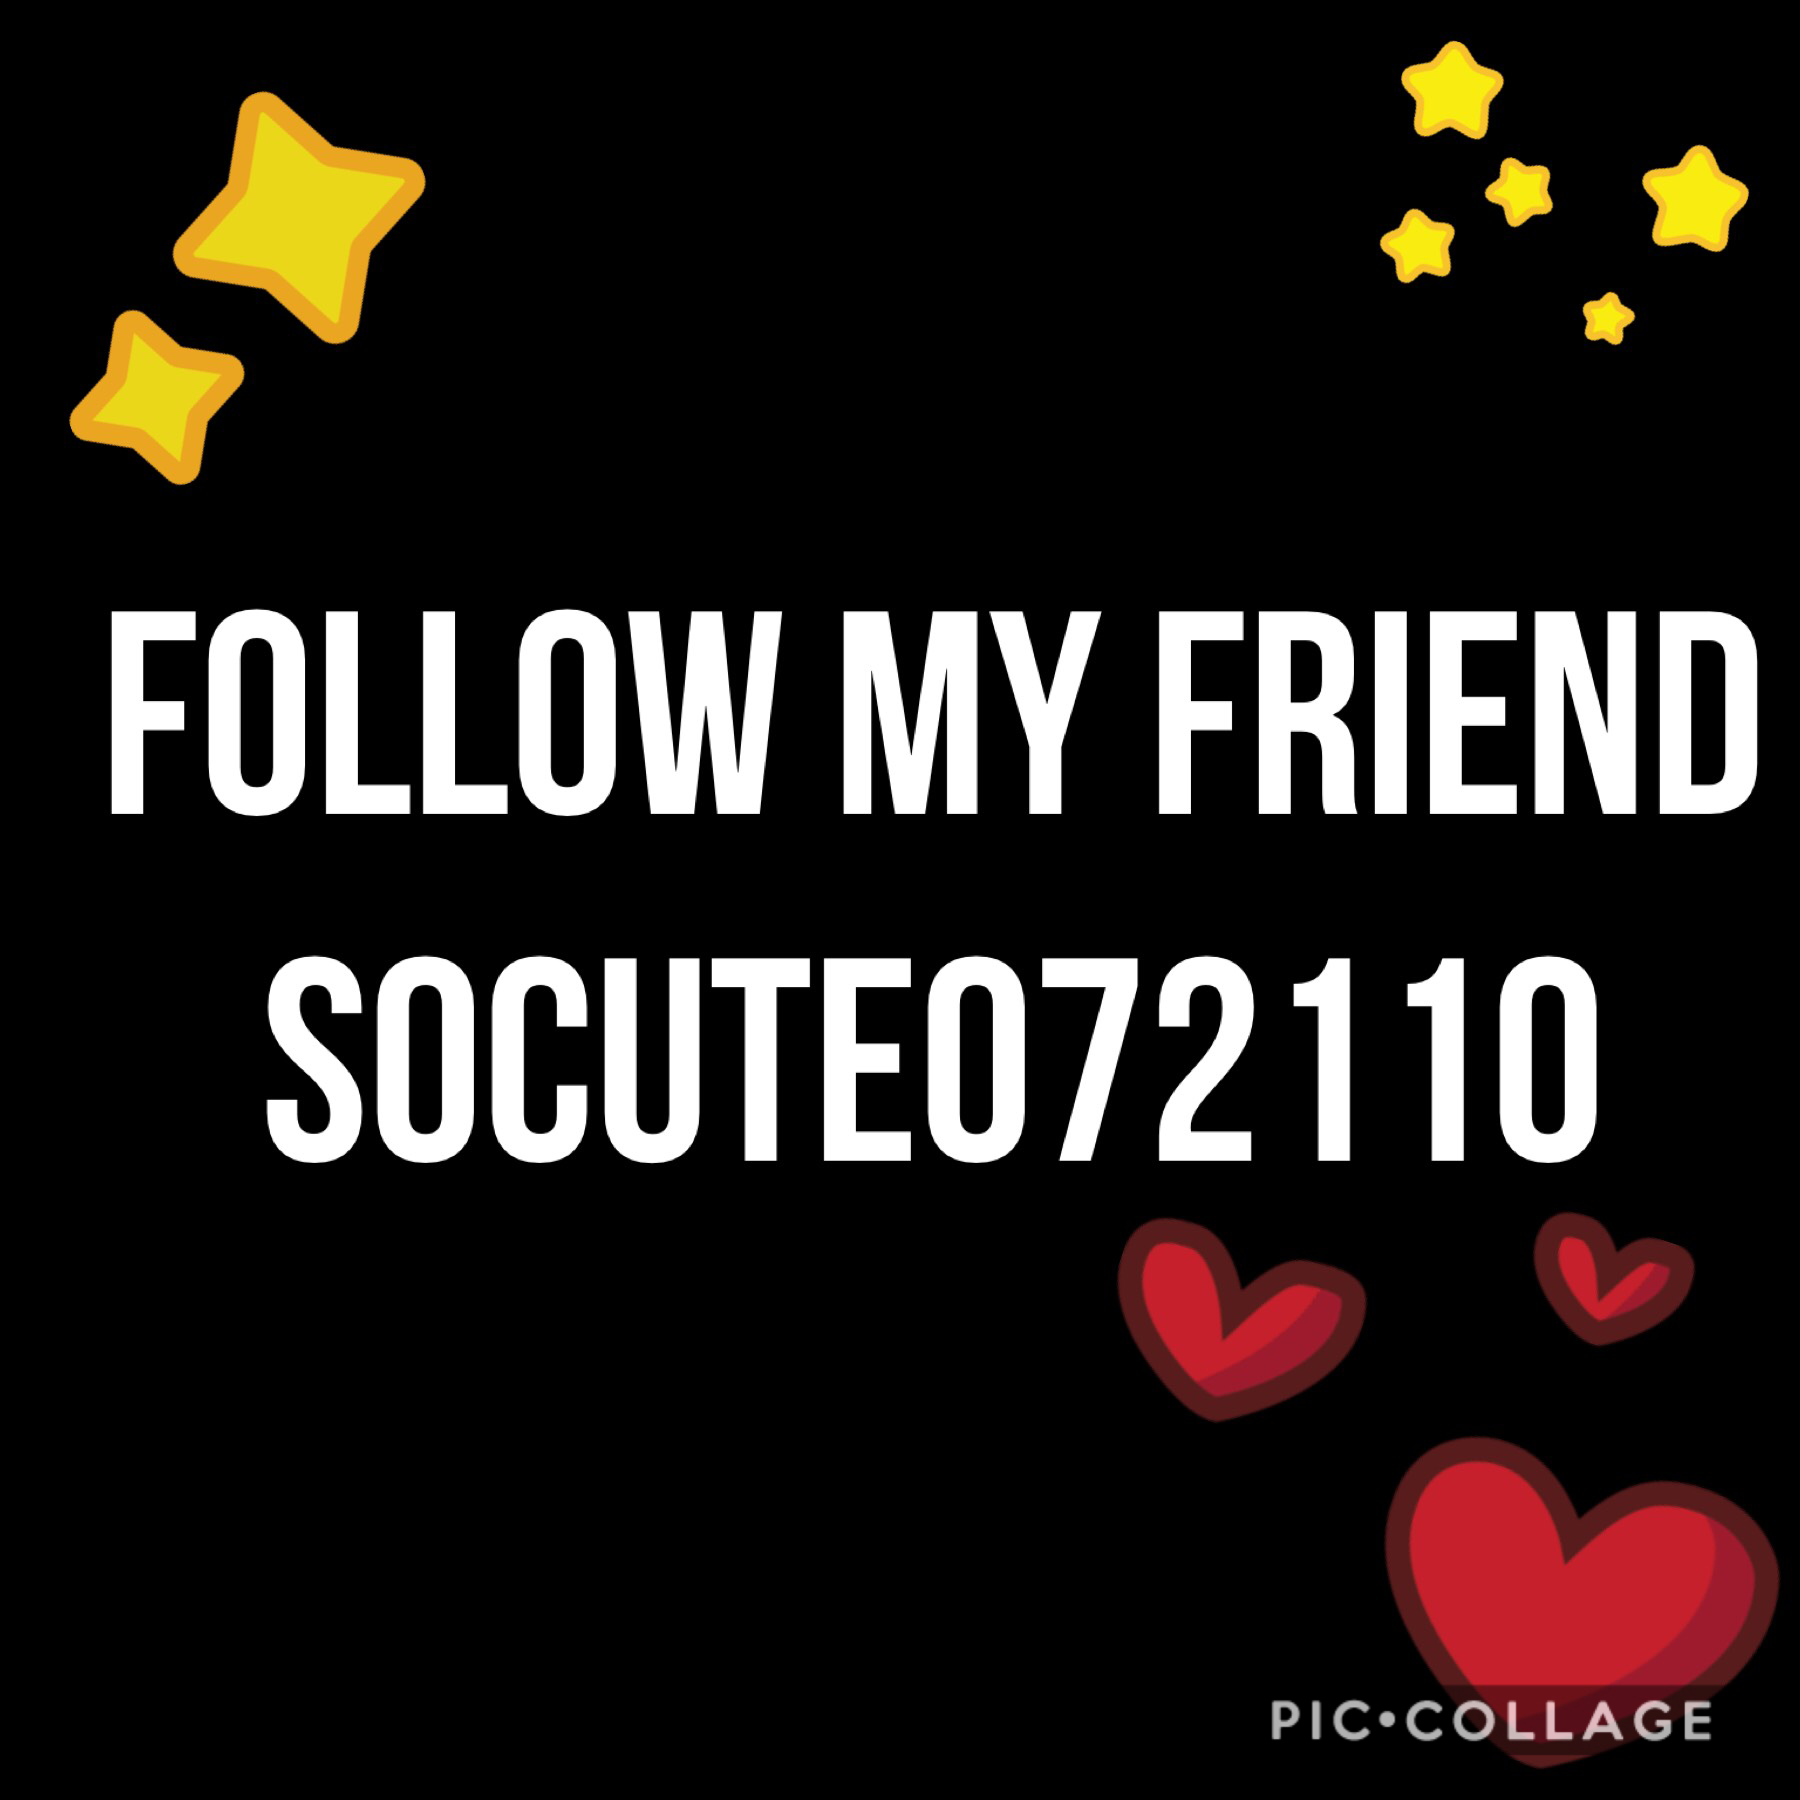 Follow her!!!😝😝❤️❤️❤️